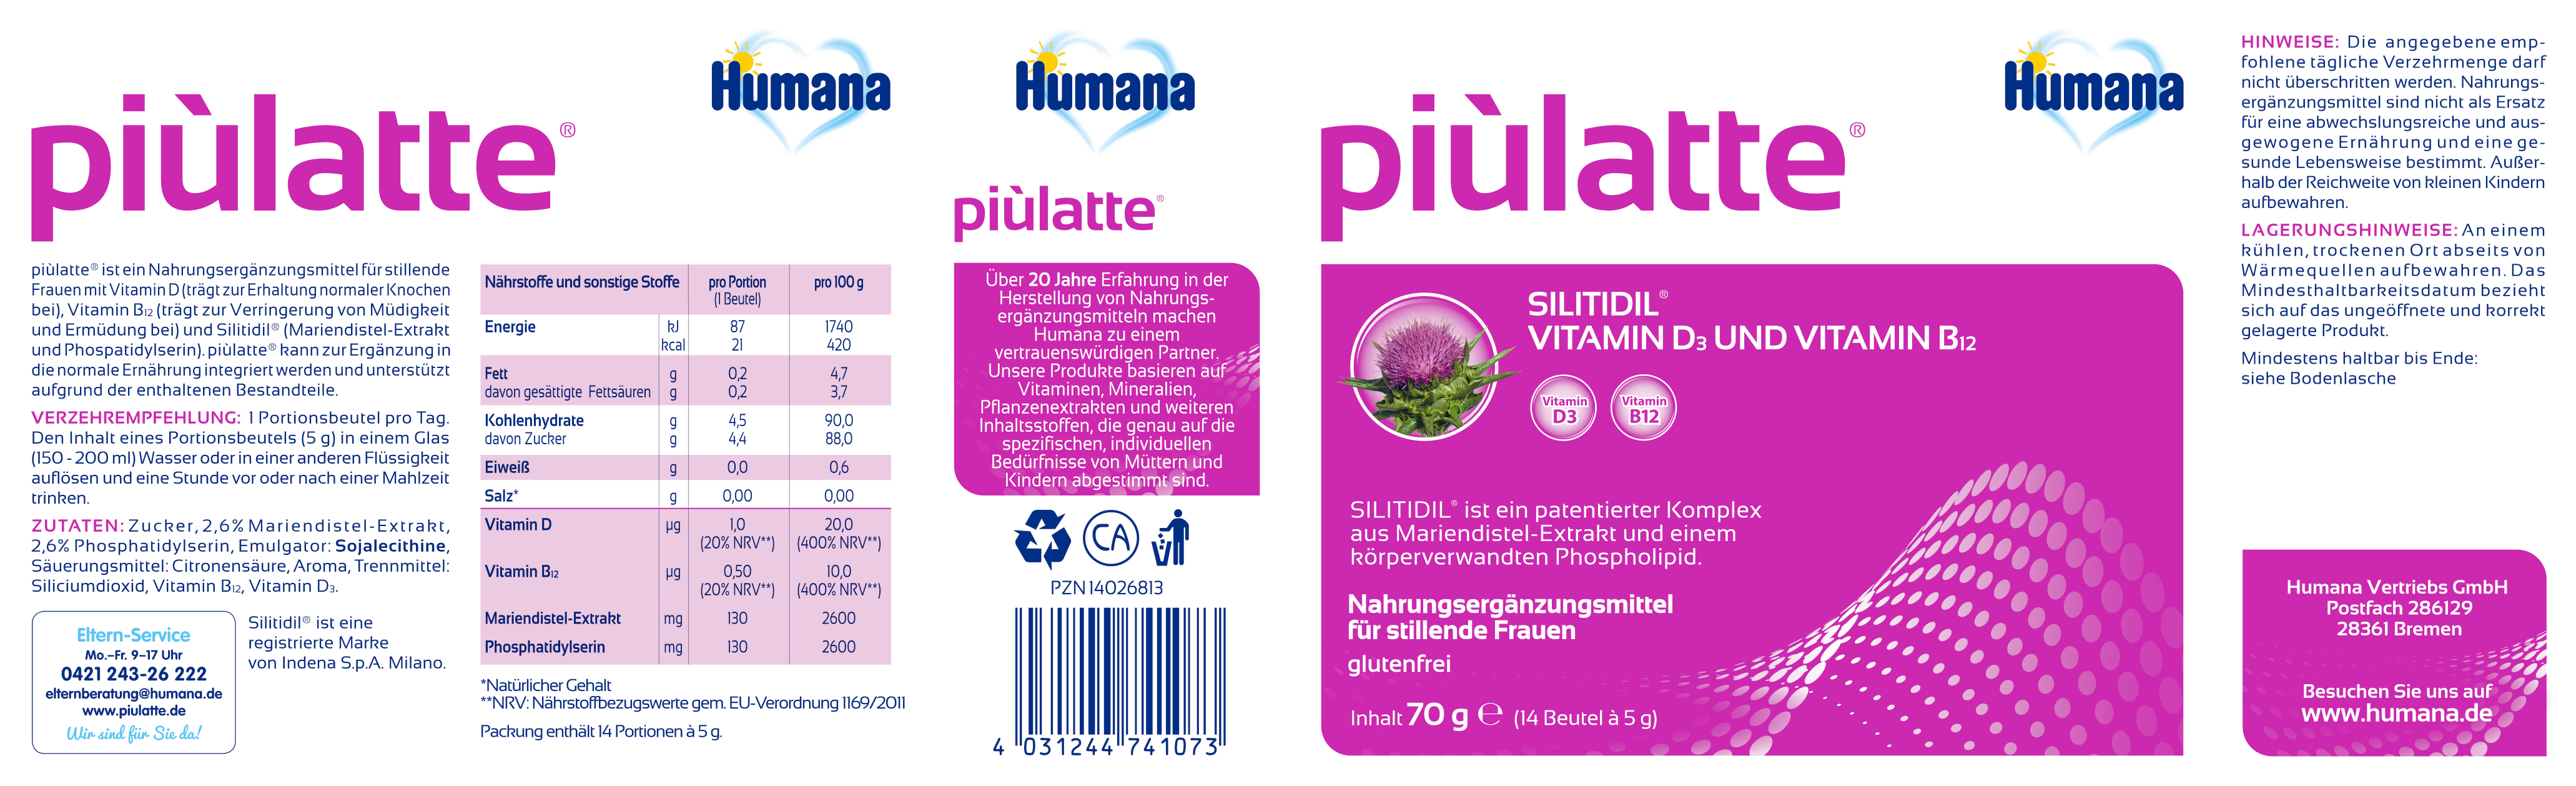 Humana piùlatte® für stillende Mütter mit Lacta-Plus-Komplex